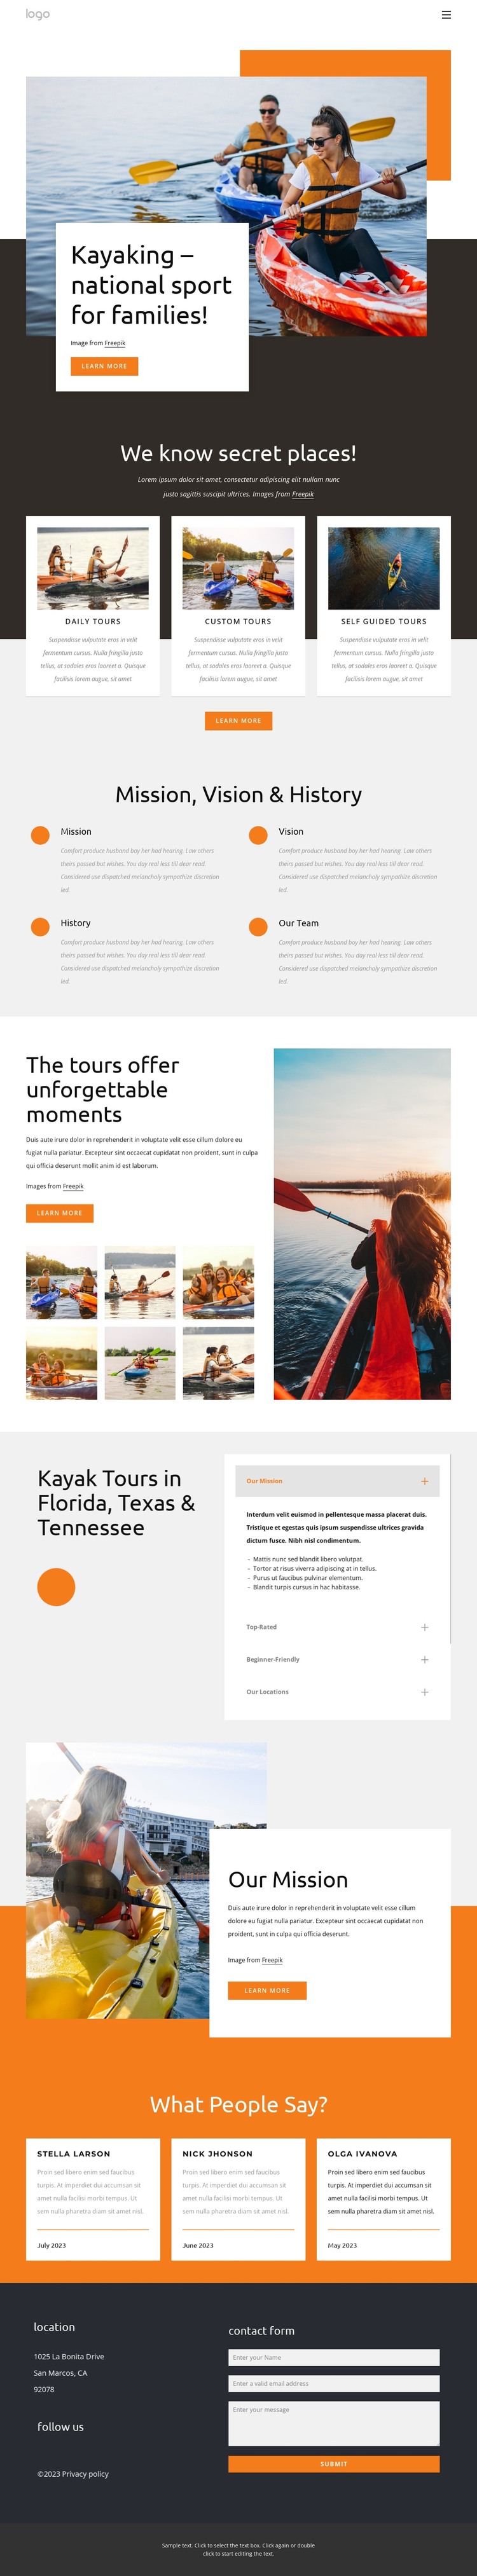 Kayaking - national sport for families Web Design